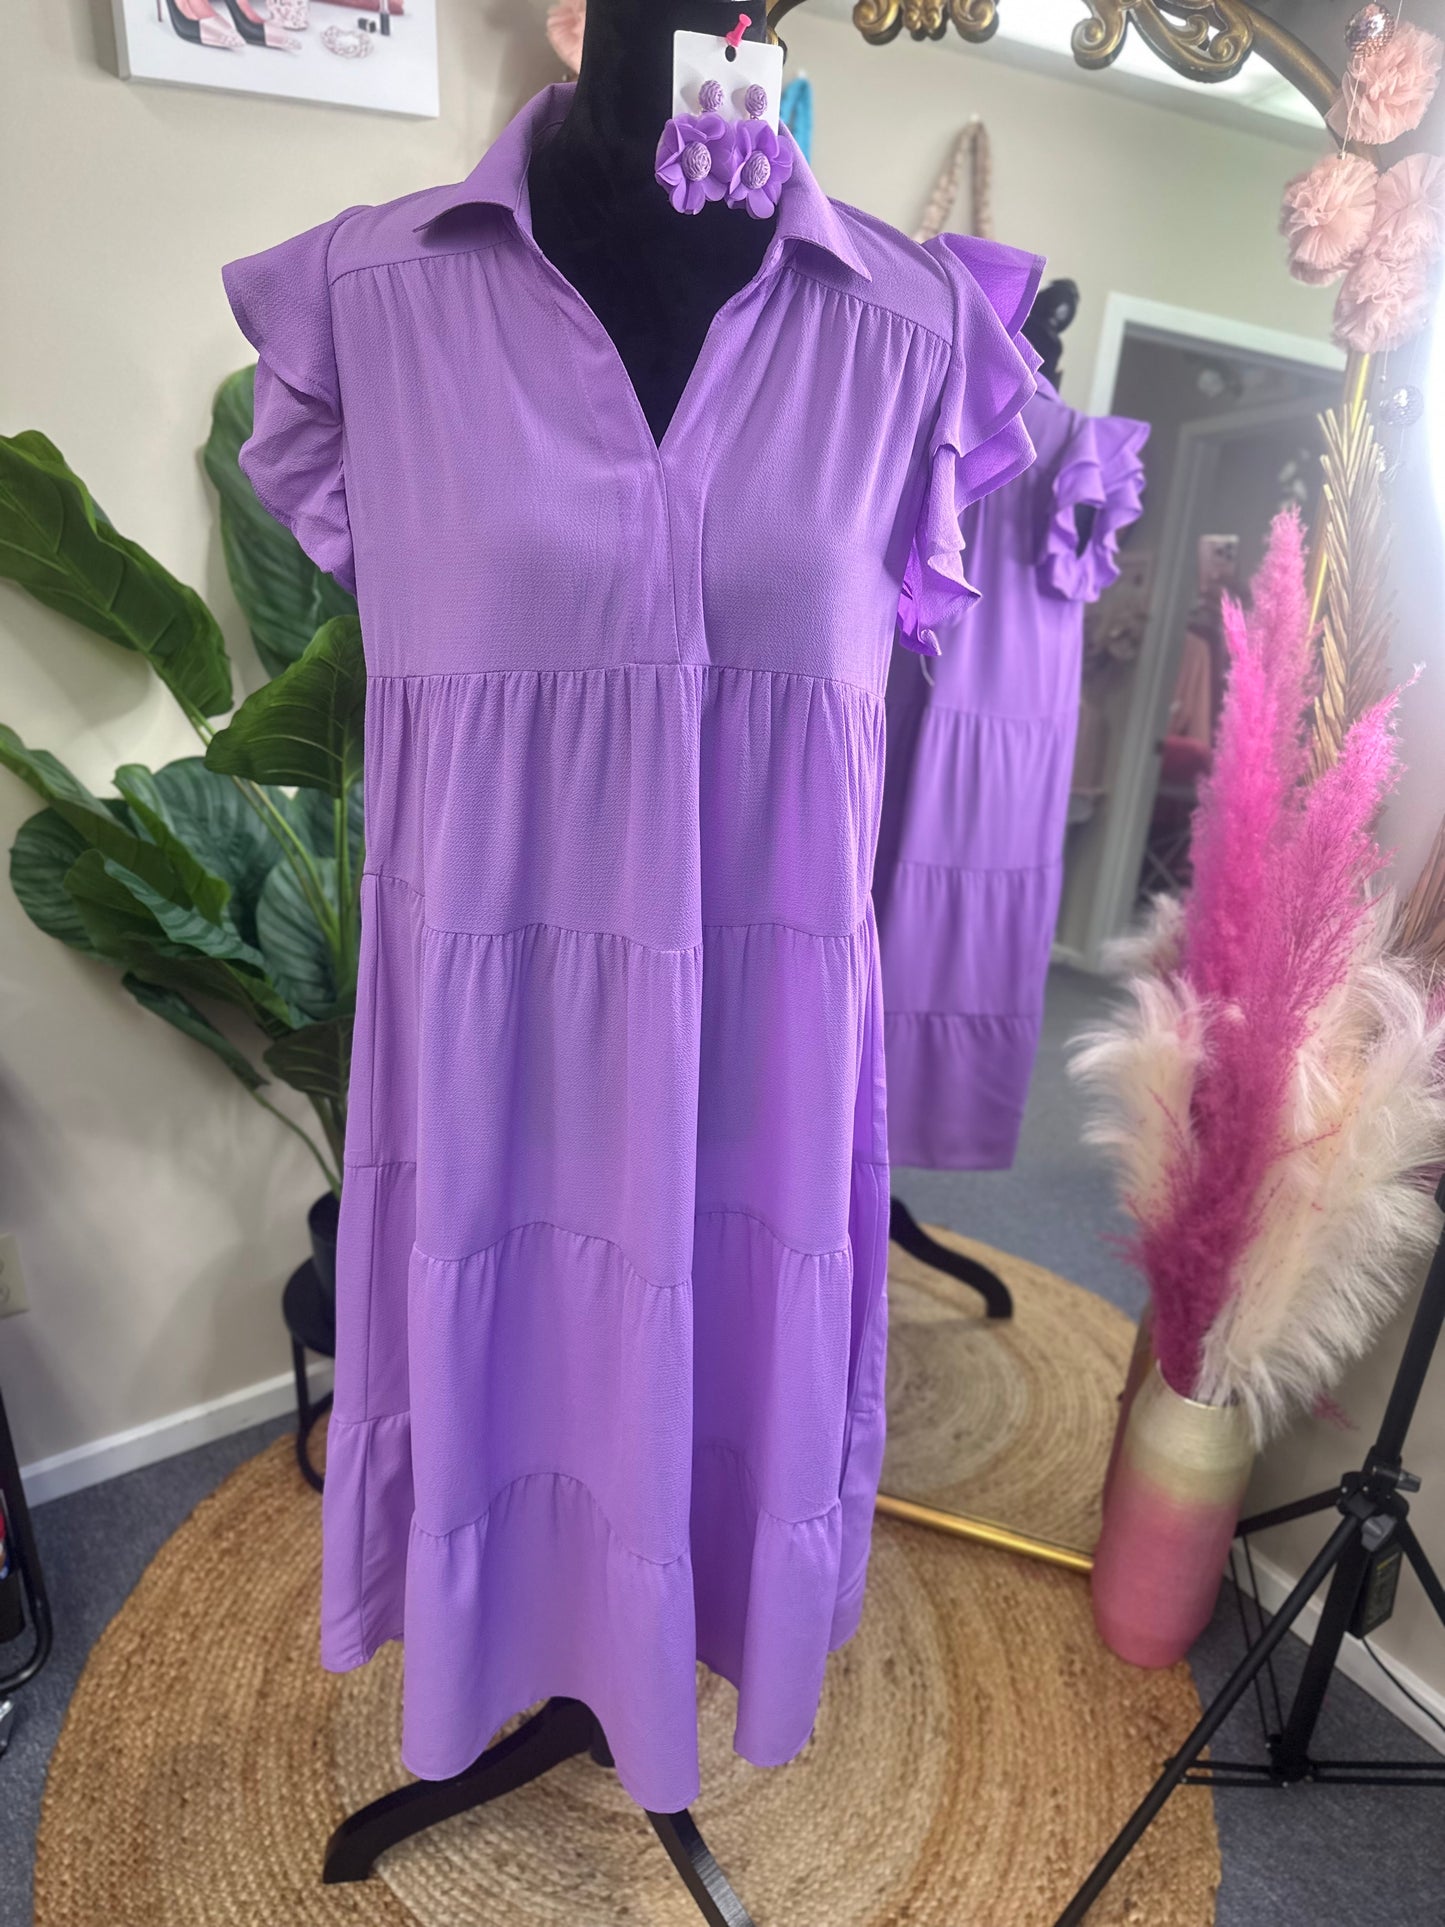 The Purple Passion Dress